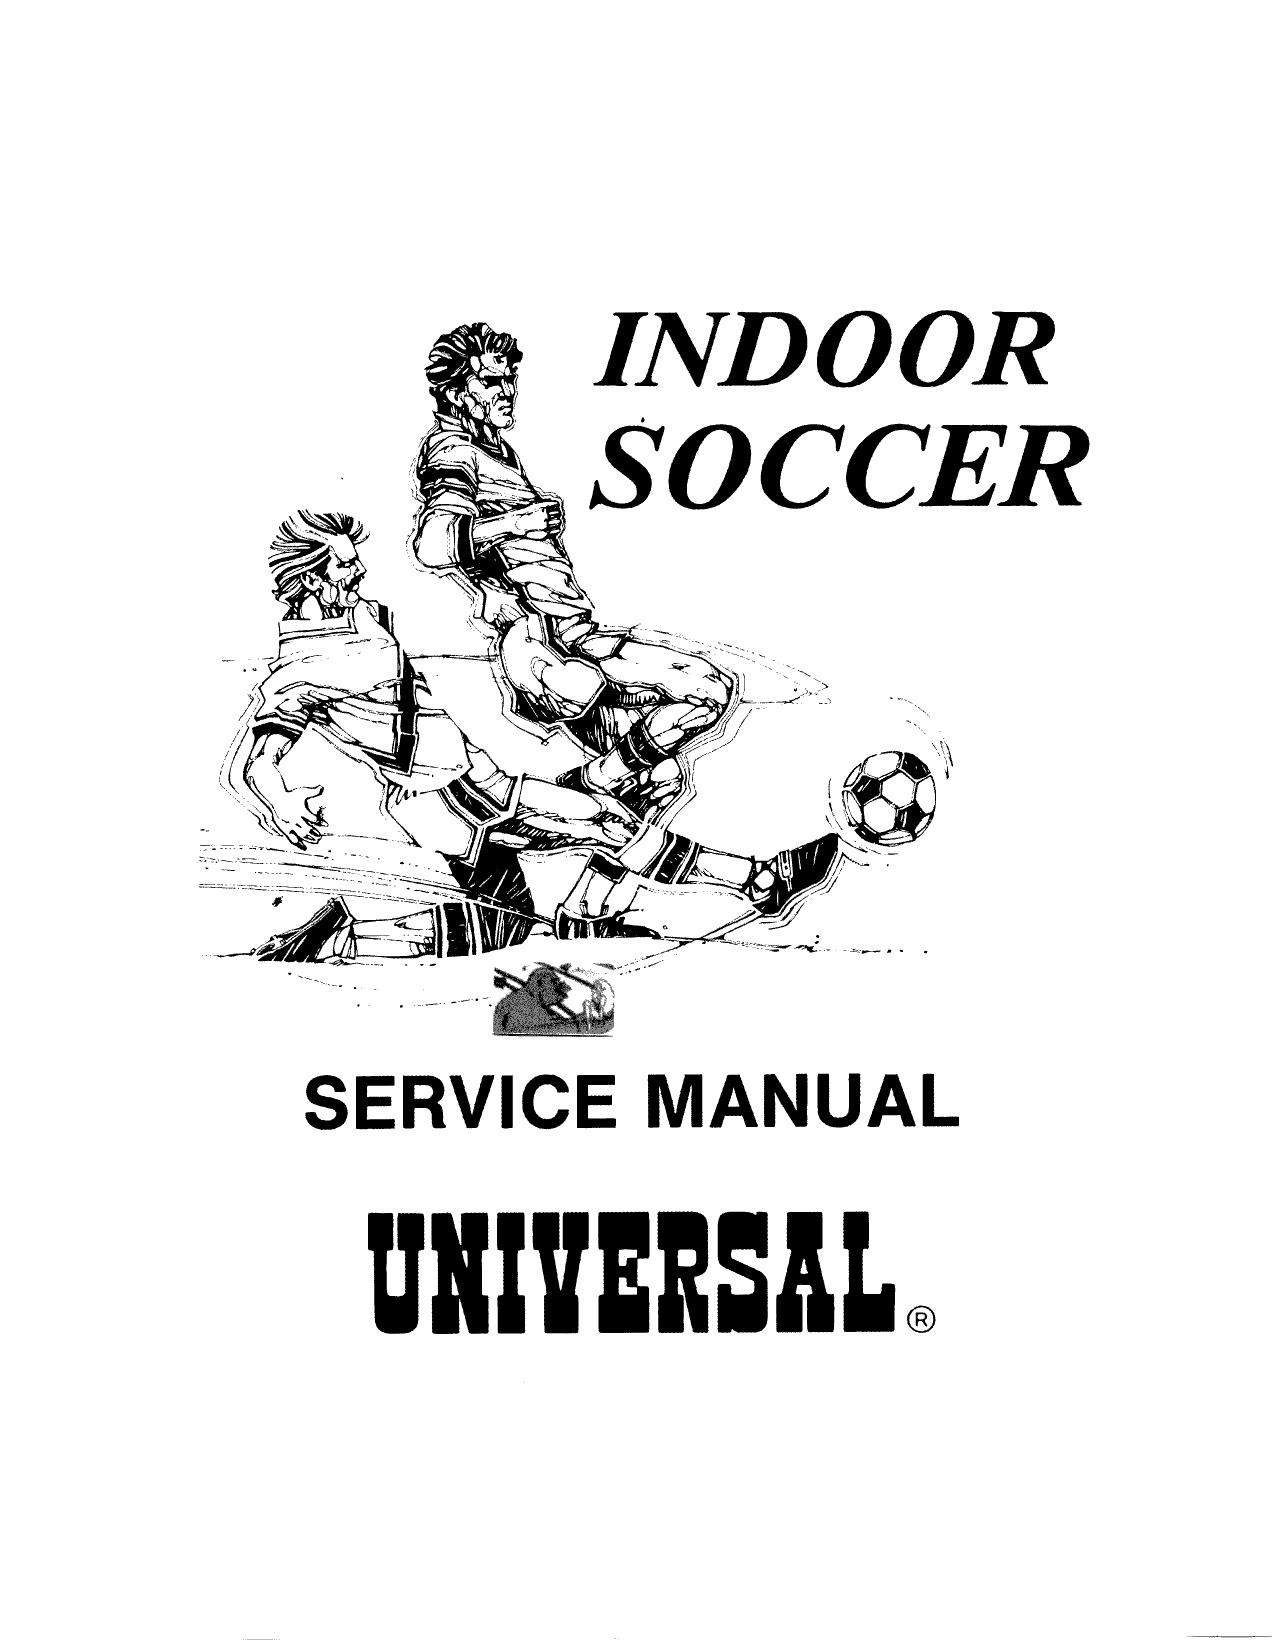 IndoorSoccer Manual